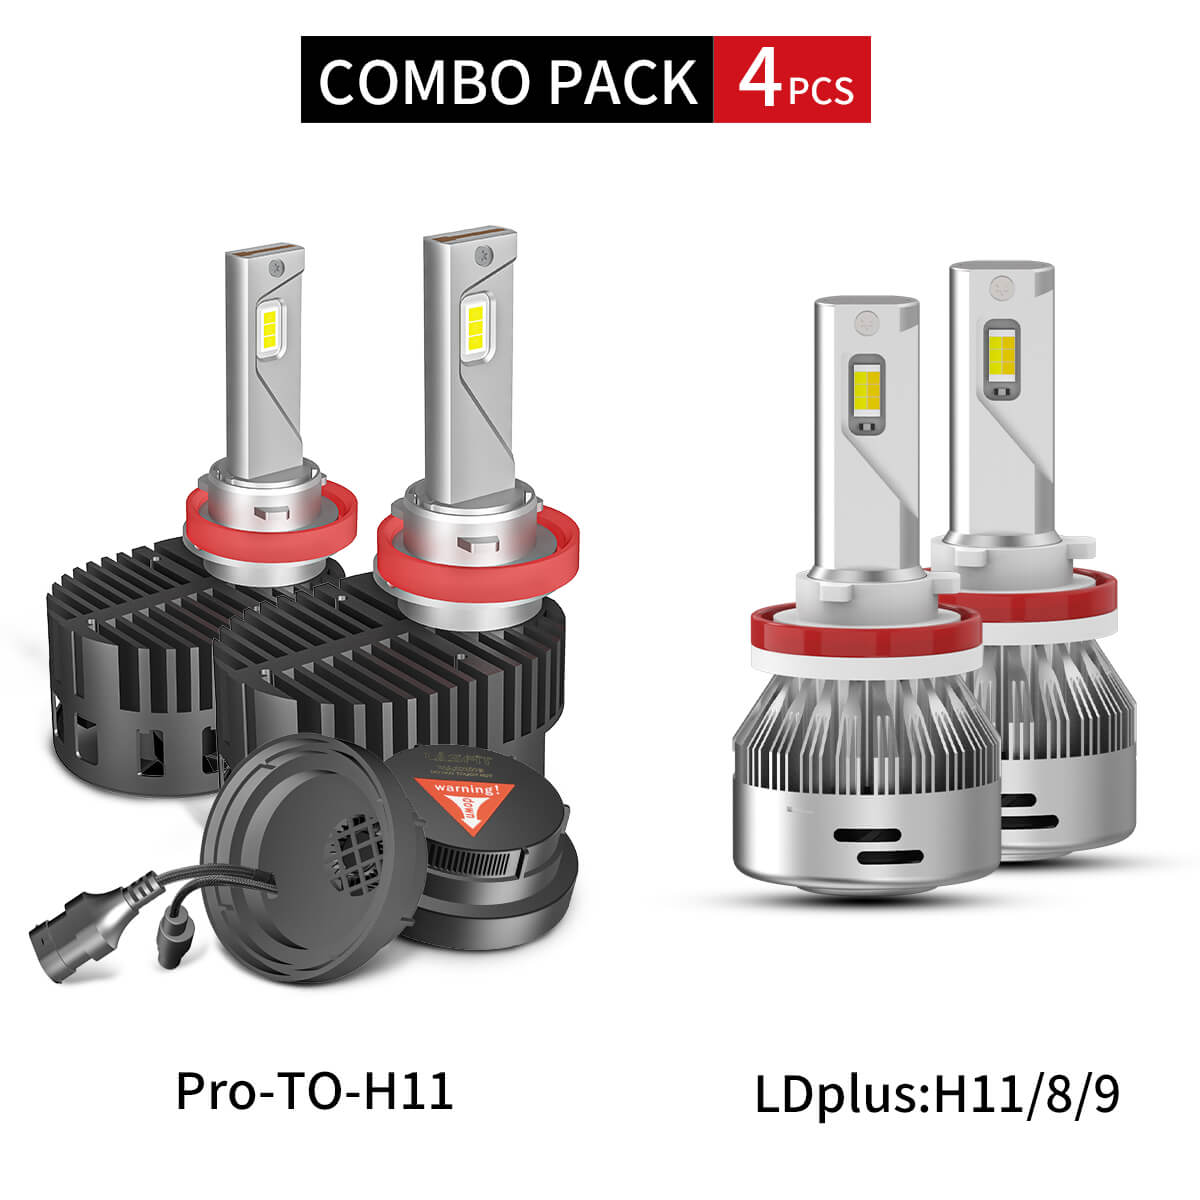 20Twenty Lighting® Perfect Fit LED Headlights, H15 Bulbs – Sound